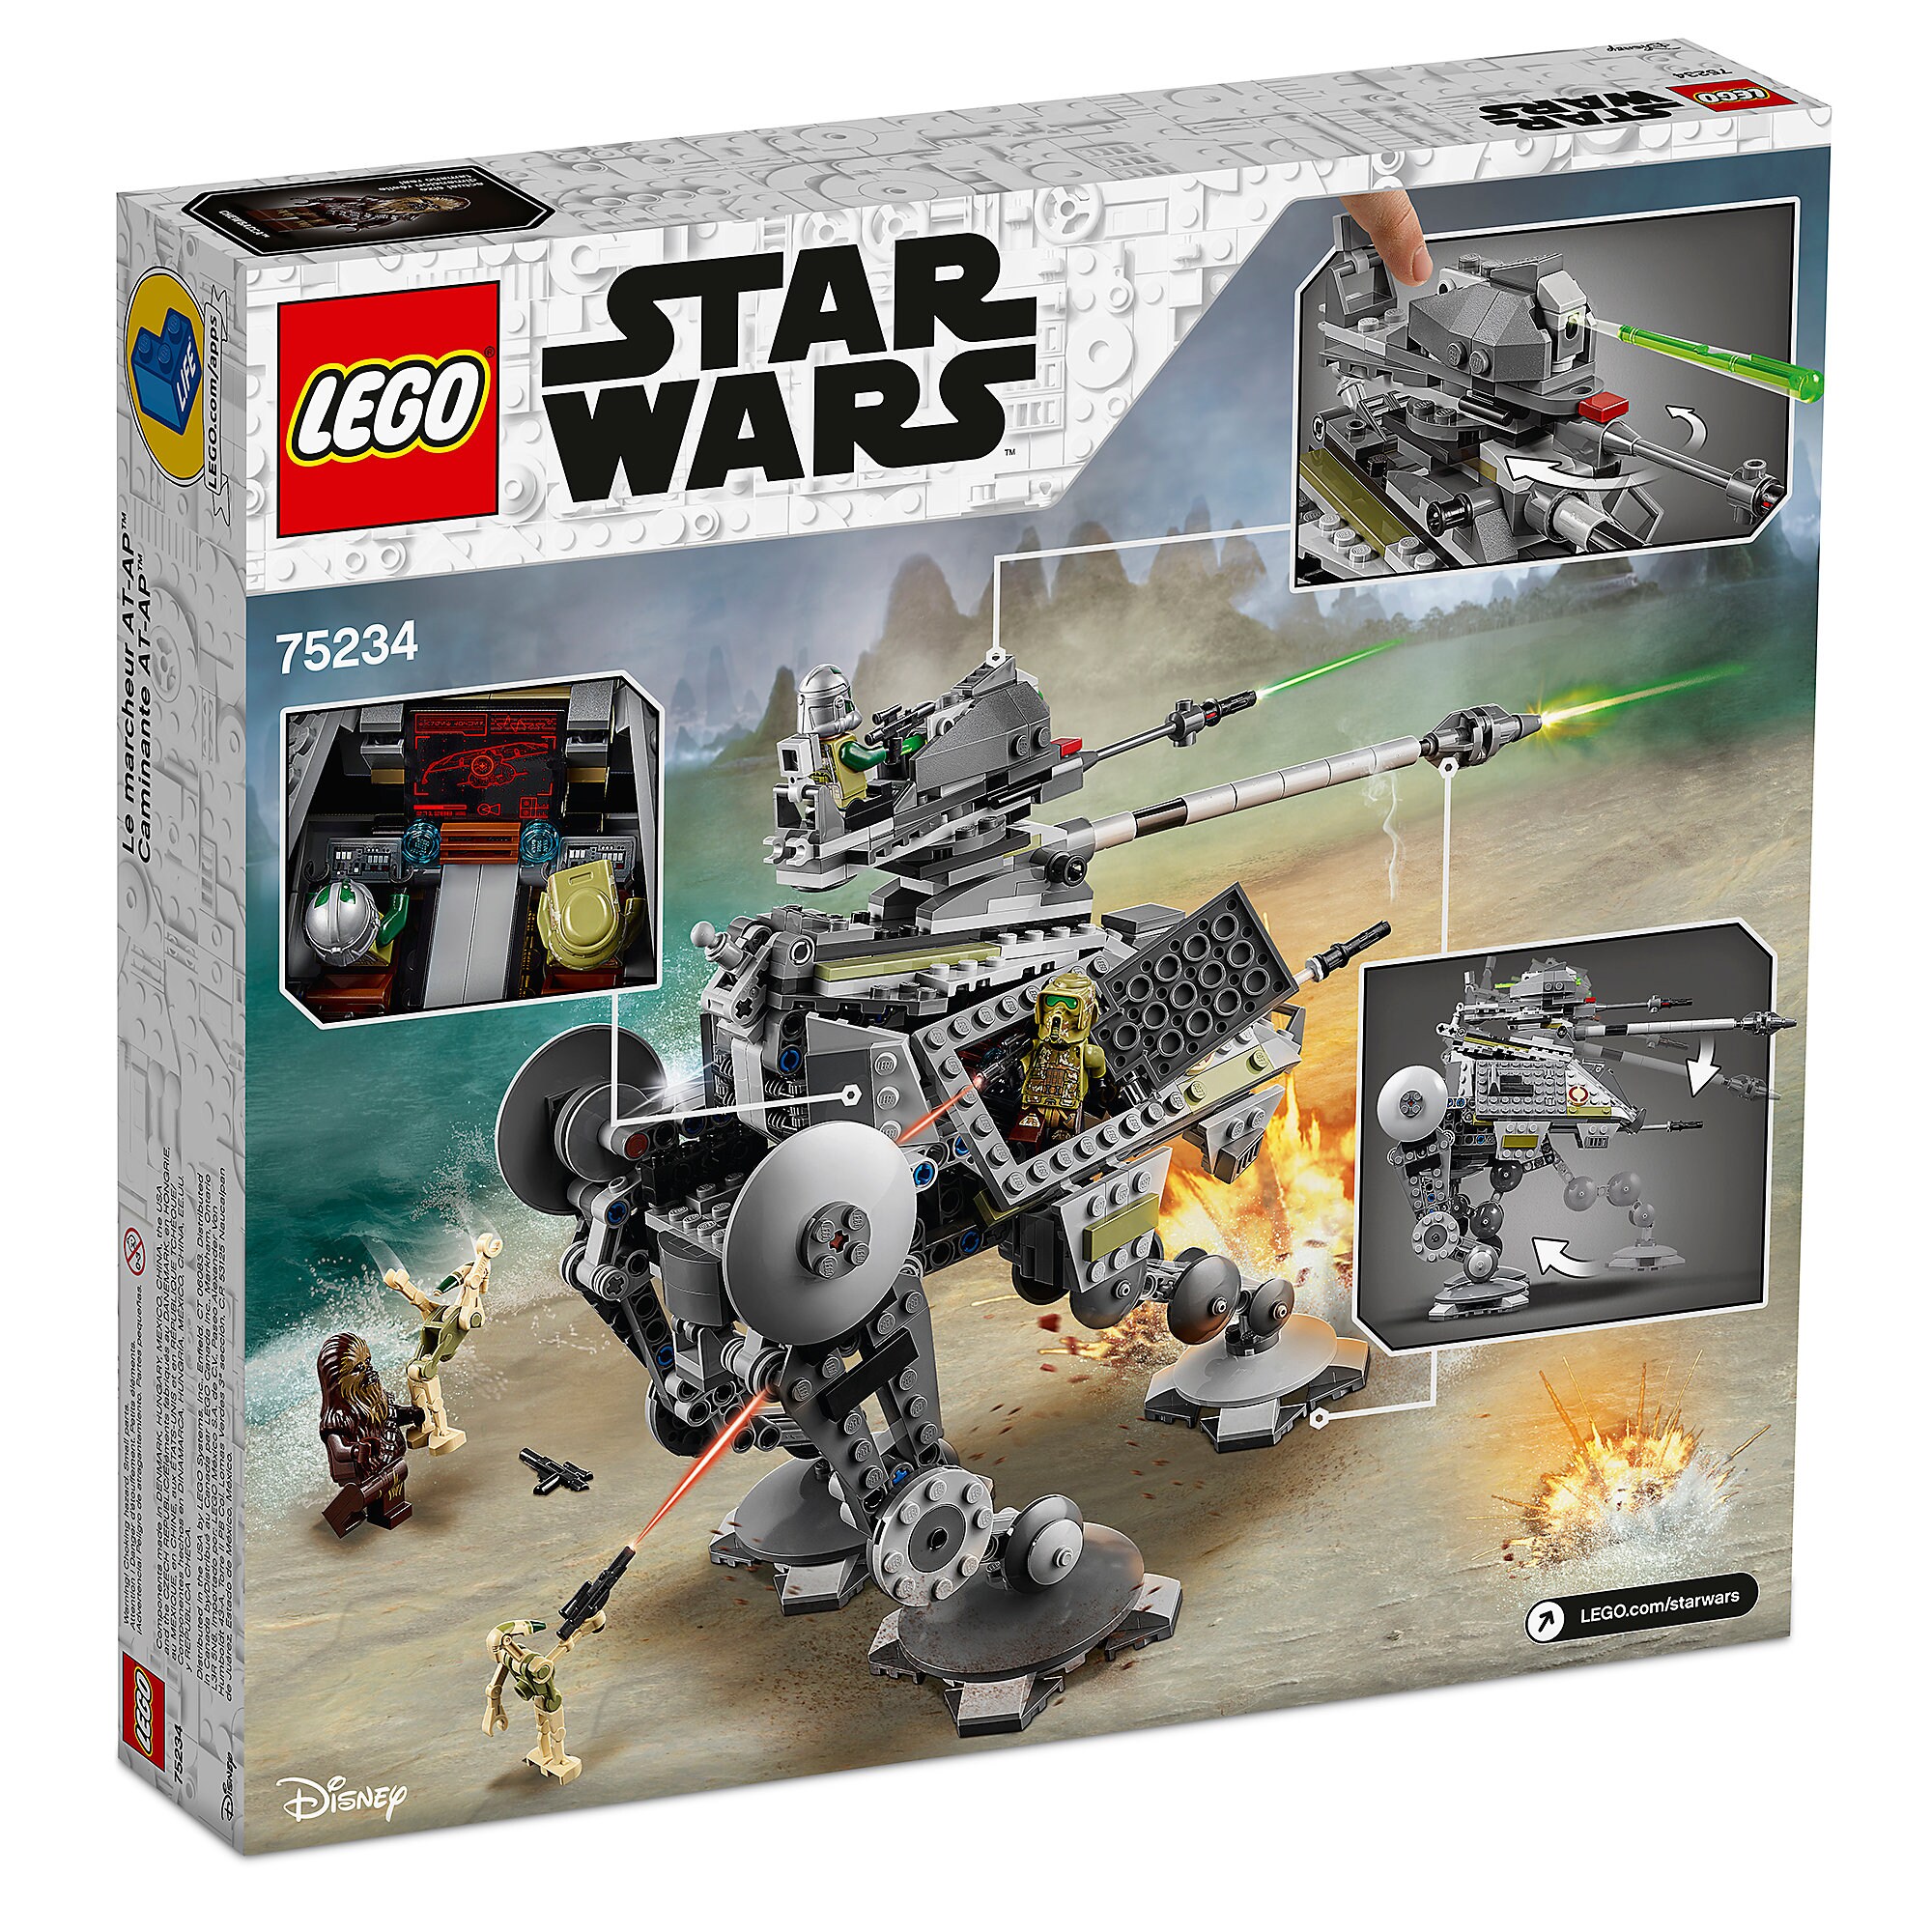 AT-AP Walker Playset by LEGO - Star Wars